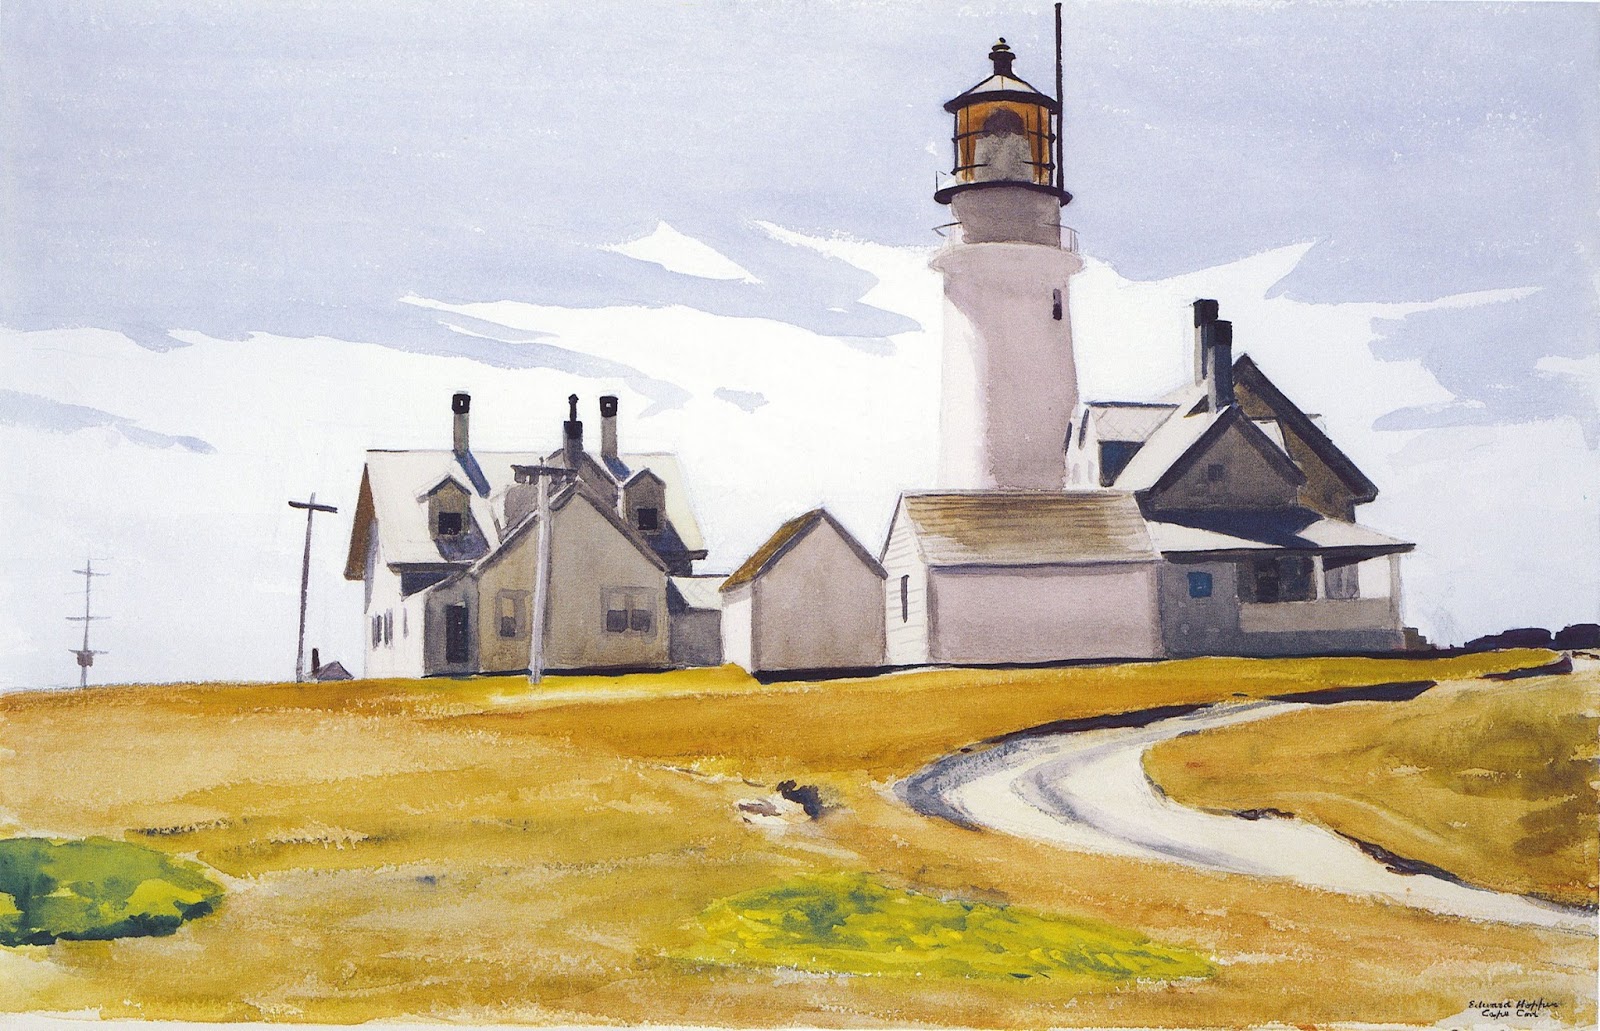 Edward+Hopper-1882-1967 (76).jpg